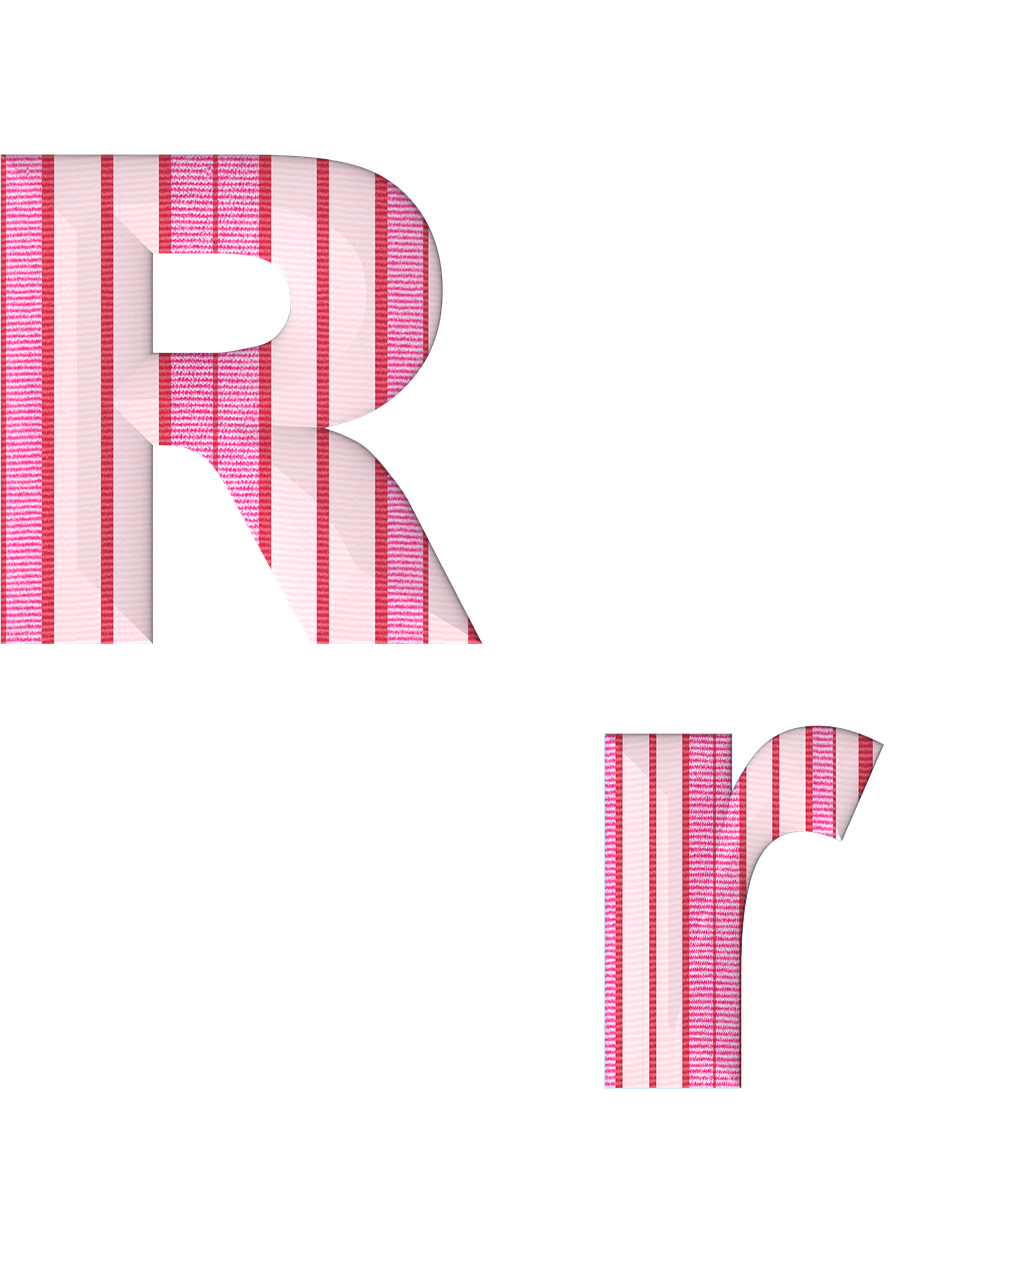 Download Free Photo Of Abc Alphabet R Fabric Stripes From Needpix Com